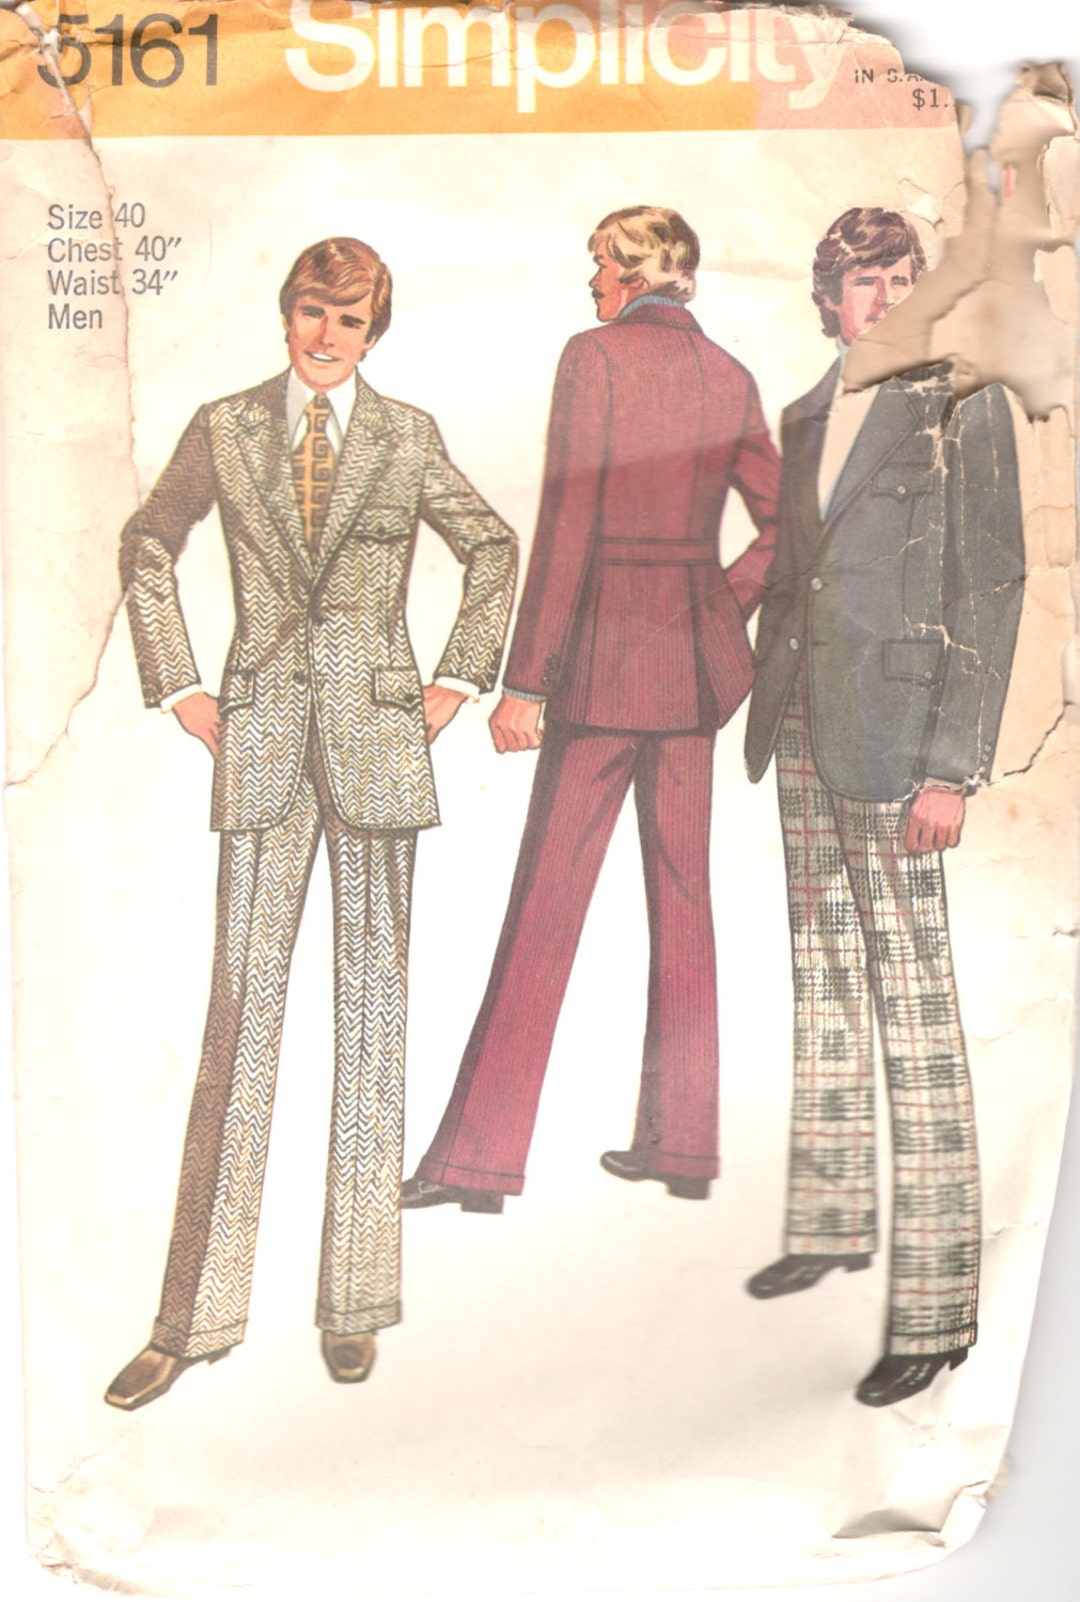 Vintage 1970s Tandy Leather Men's Top Coat Jacket Sewing Pattern UNCUT Size  38 